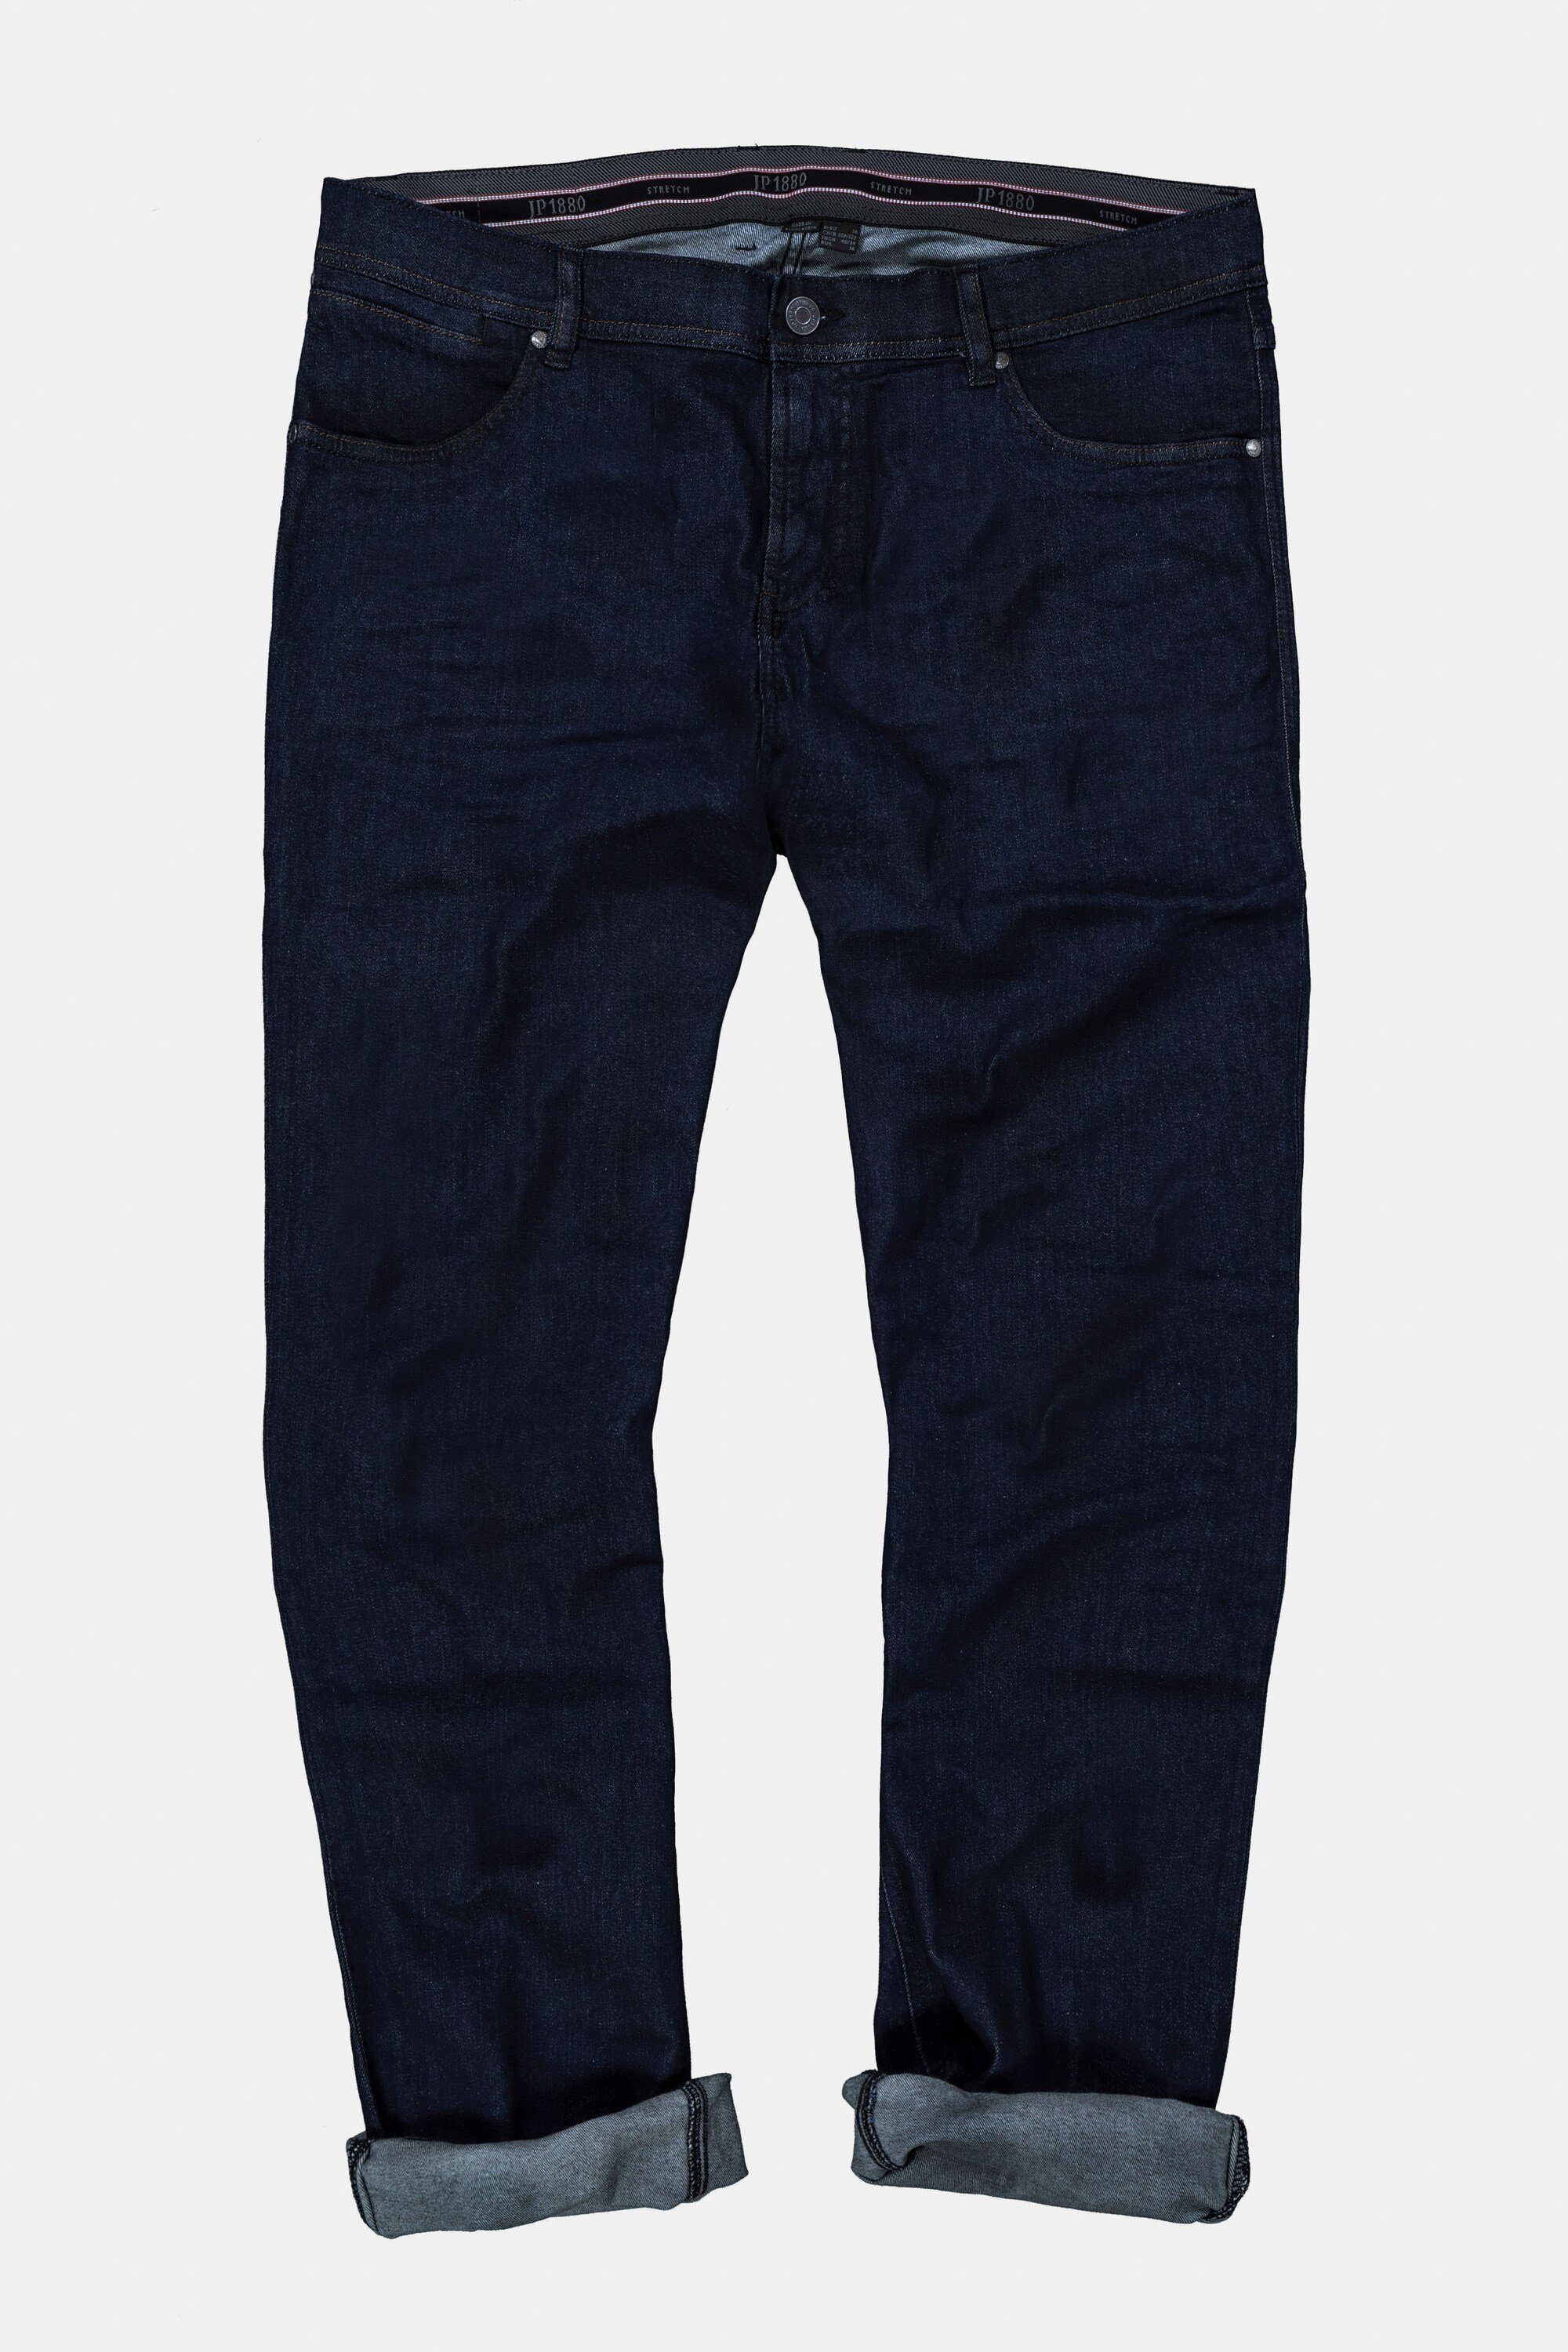 dark 70/35 Denim Bauchfit Jeans Cargohose blue denim bis JP1880 Gr.